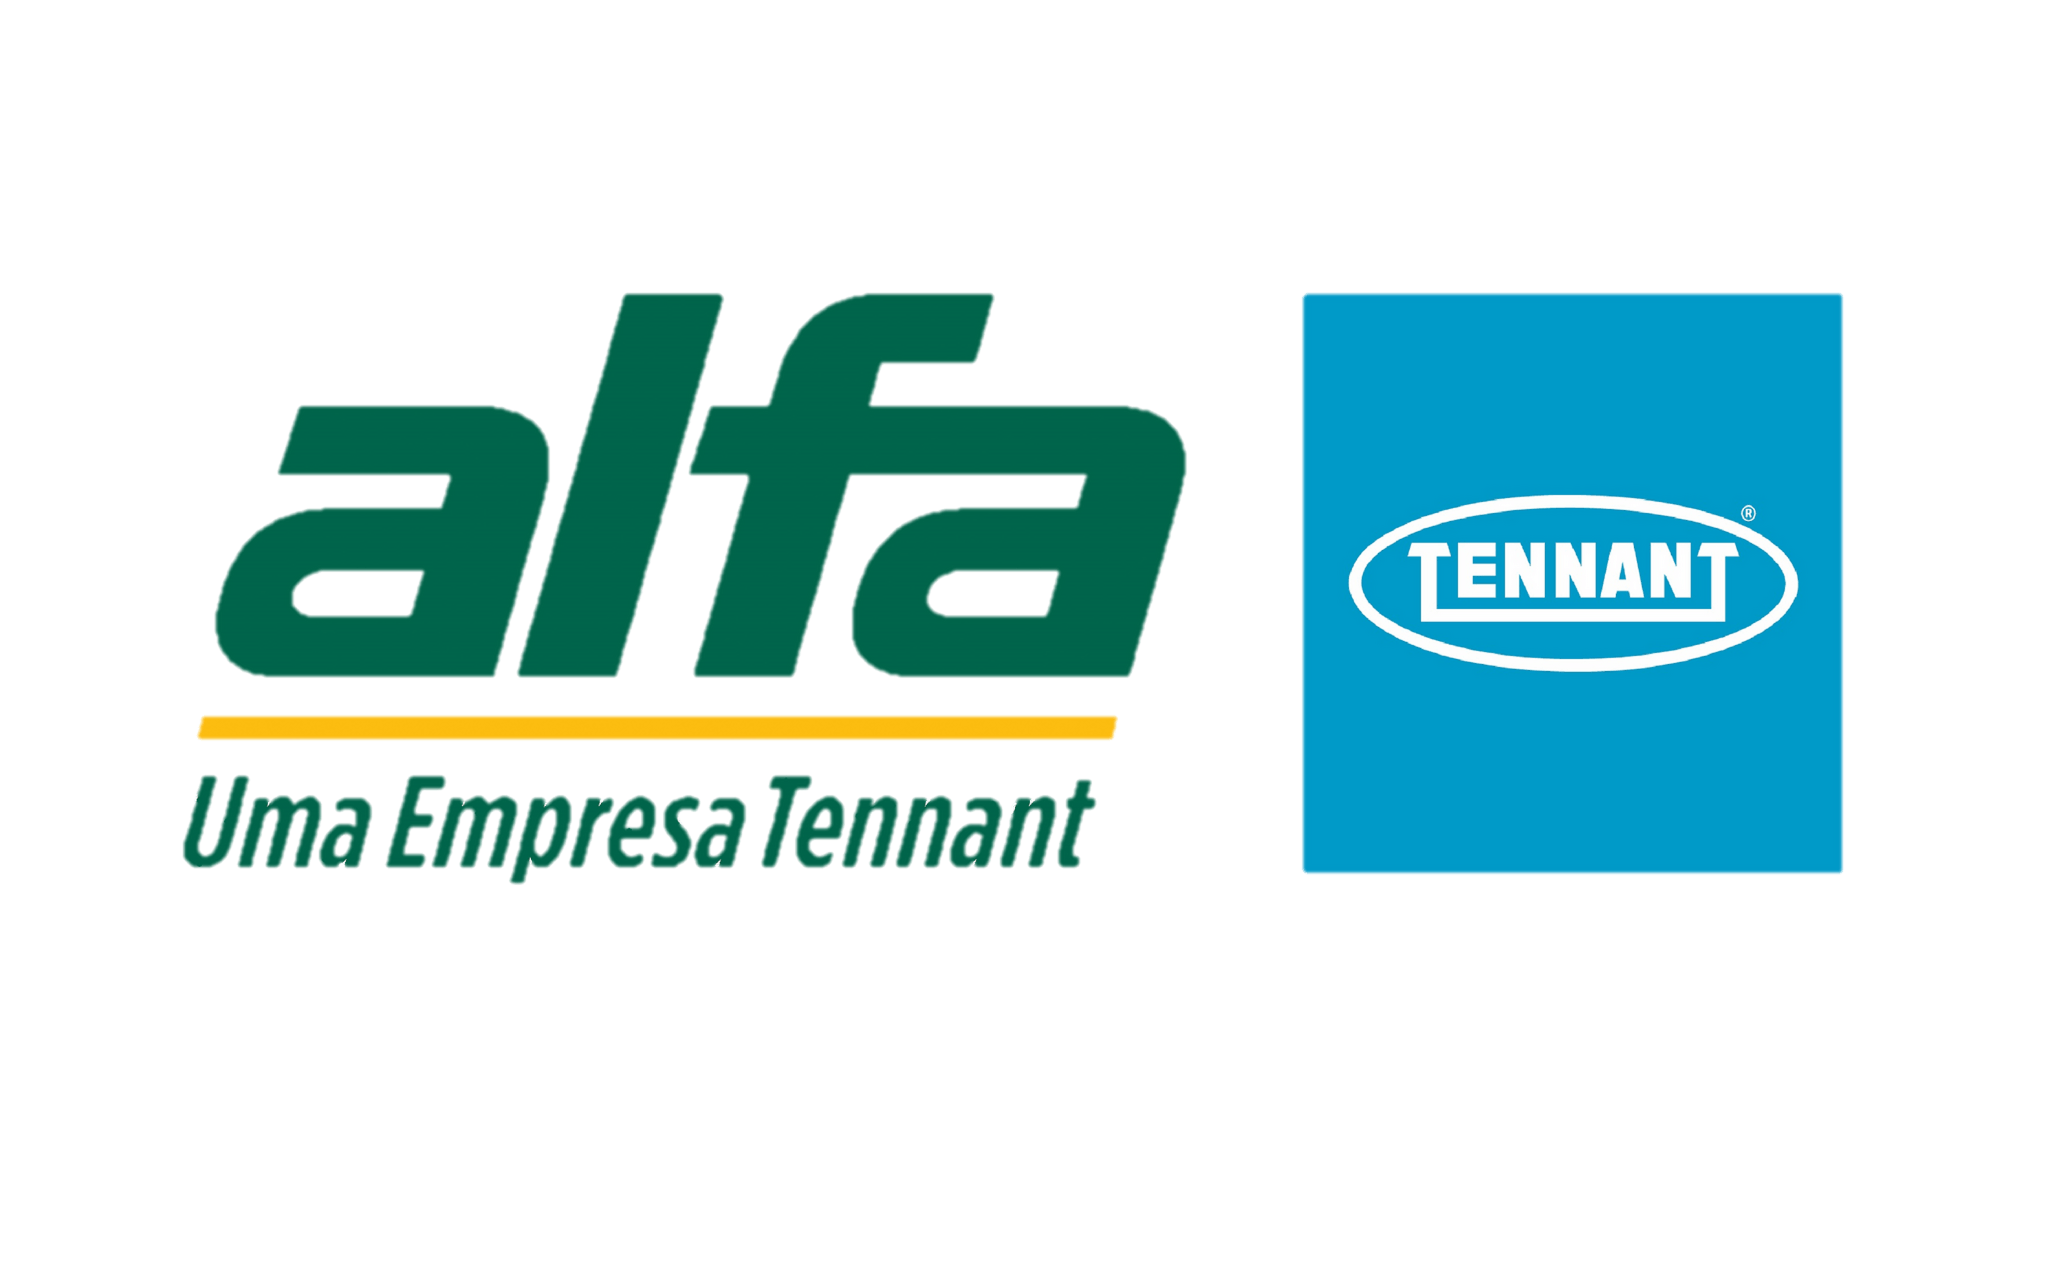 Tennant Logo - Alfa Tennant - Bett Brasil | Creating a better future by ...